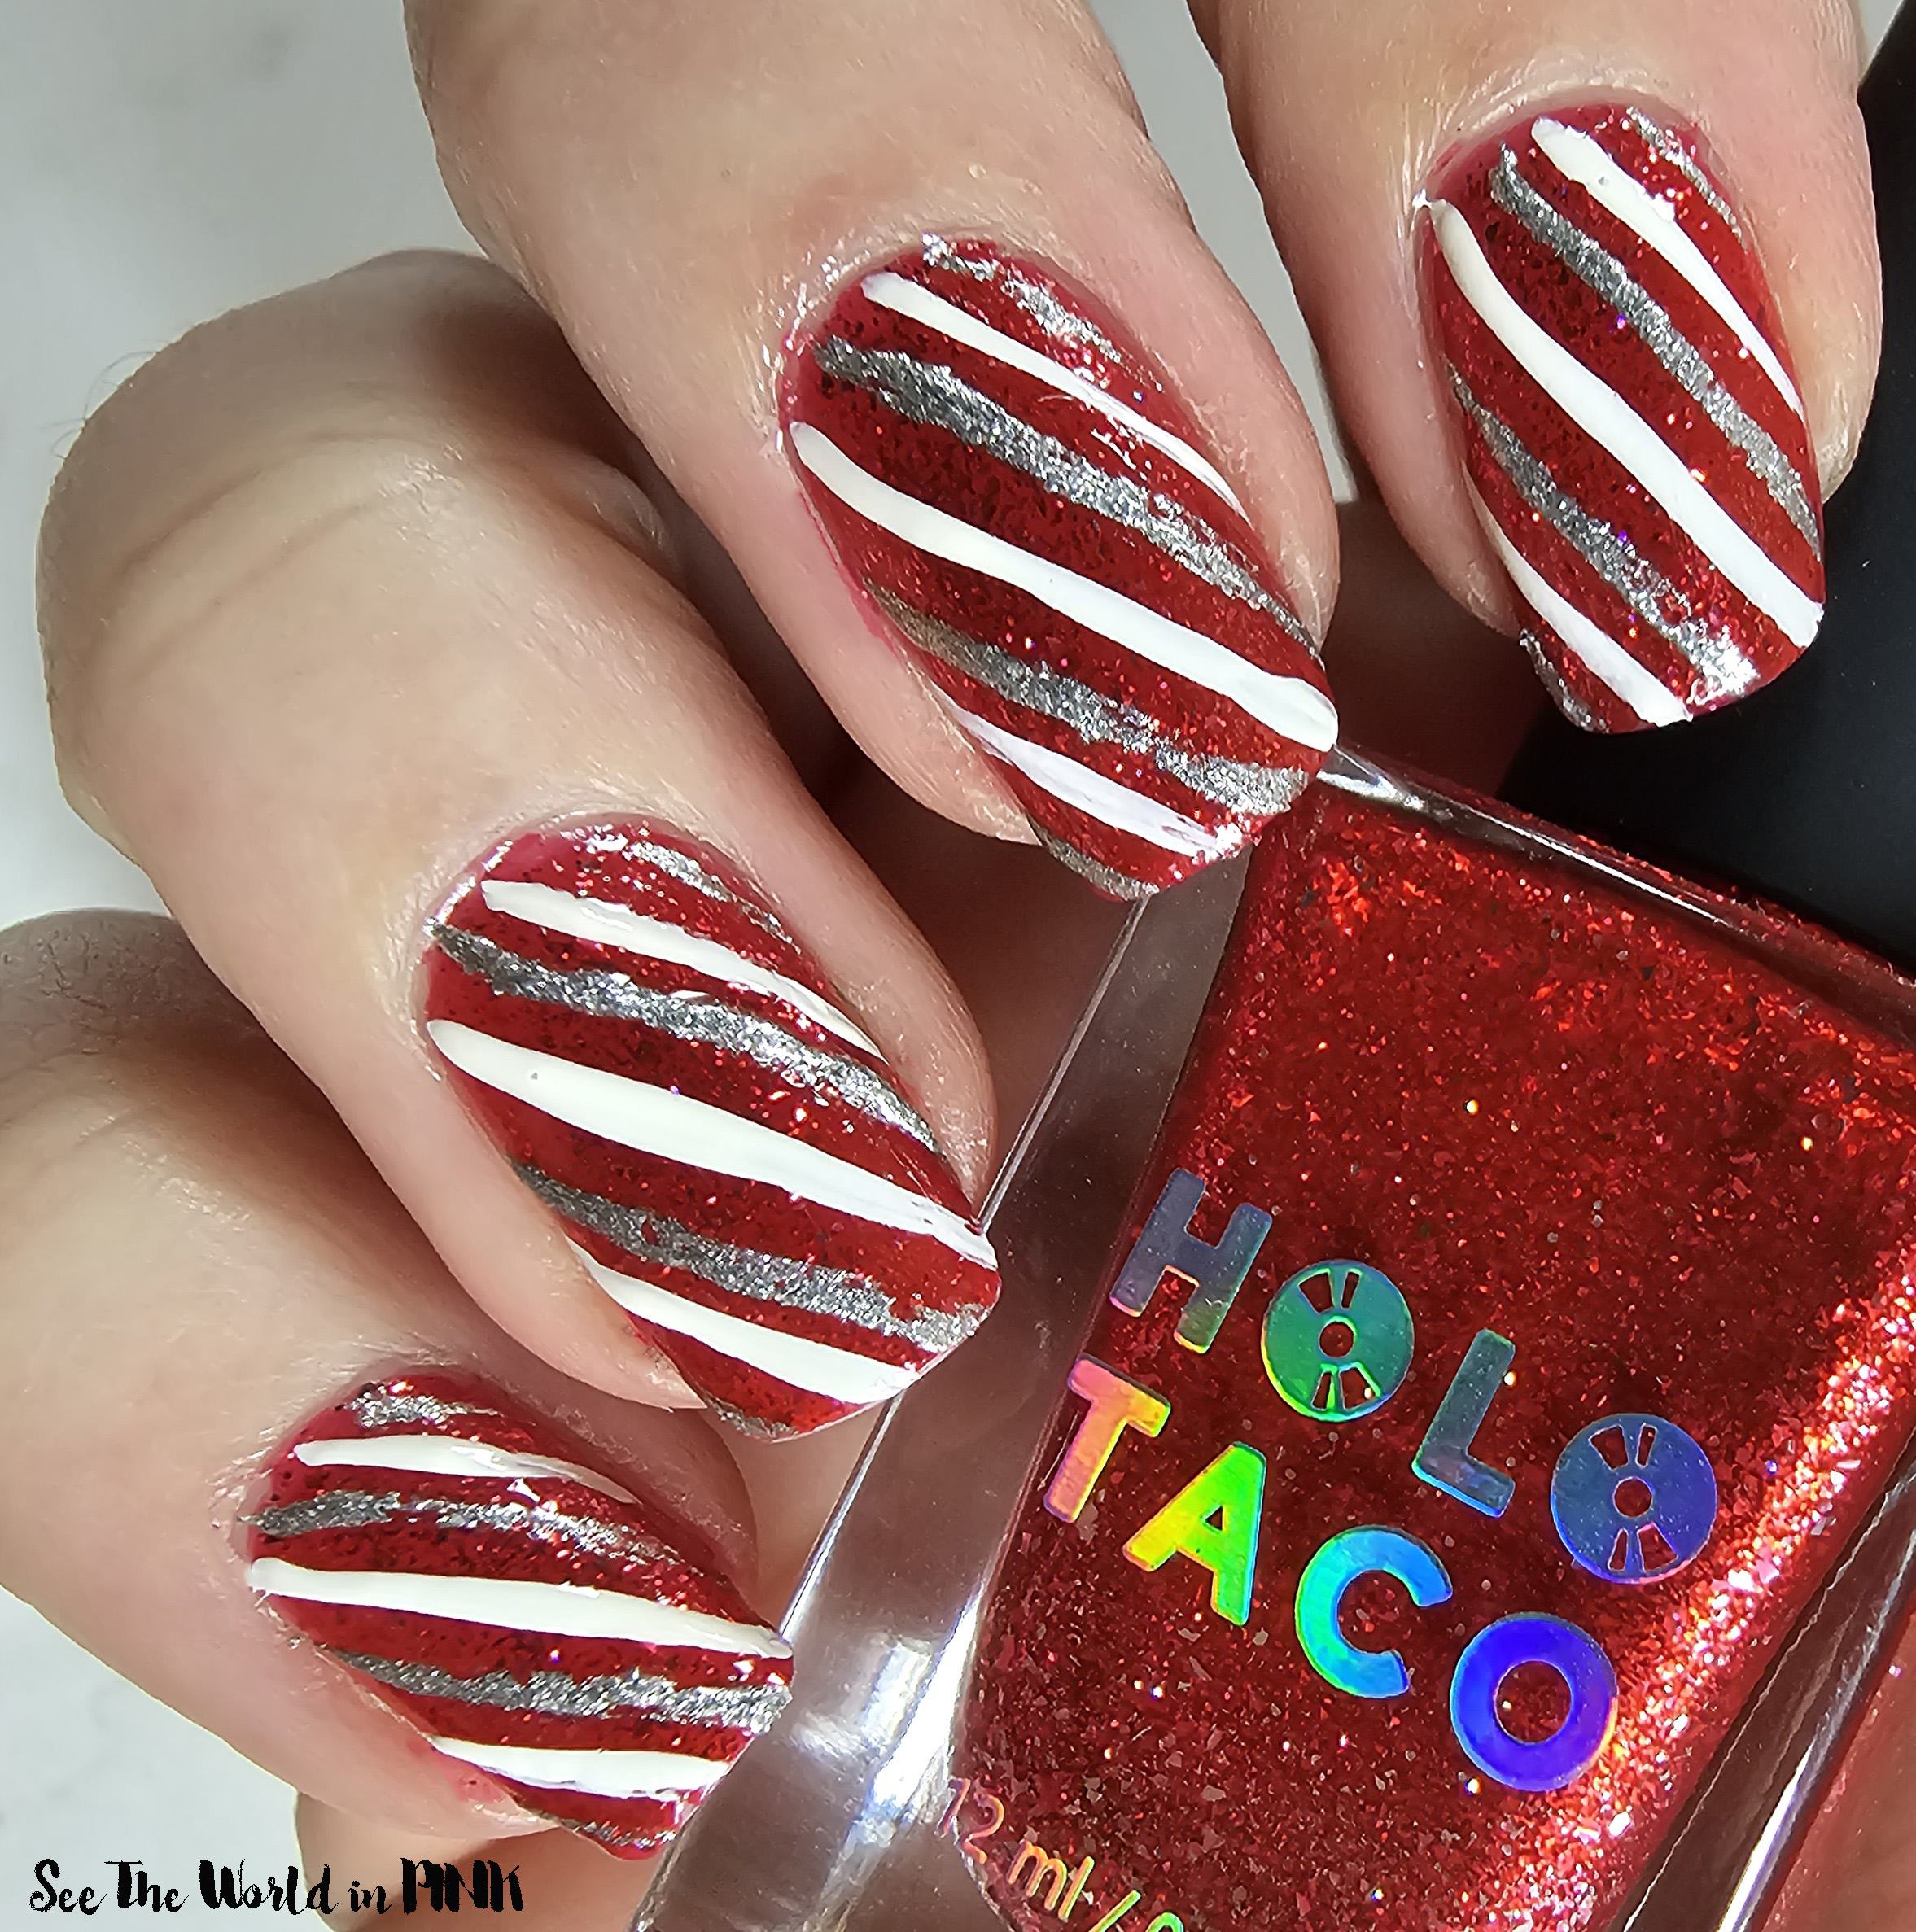 Manicure Monday - Candy Cane Striped Nails